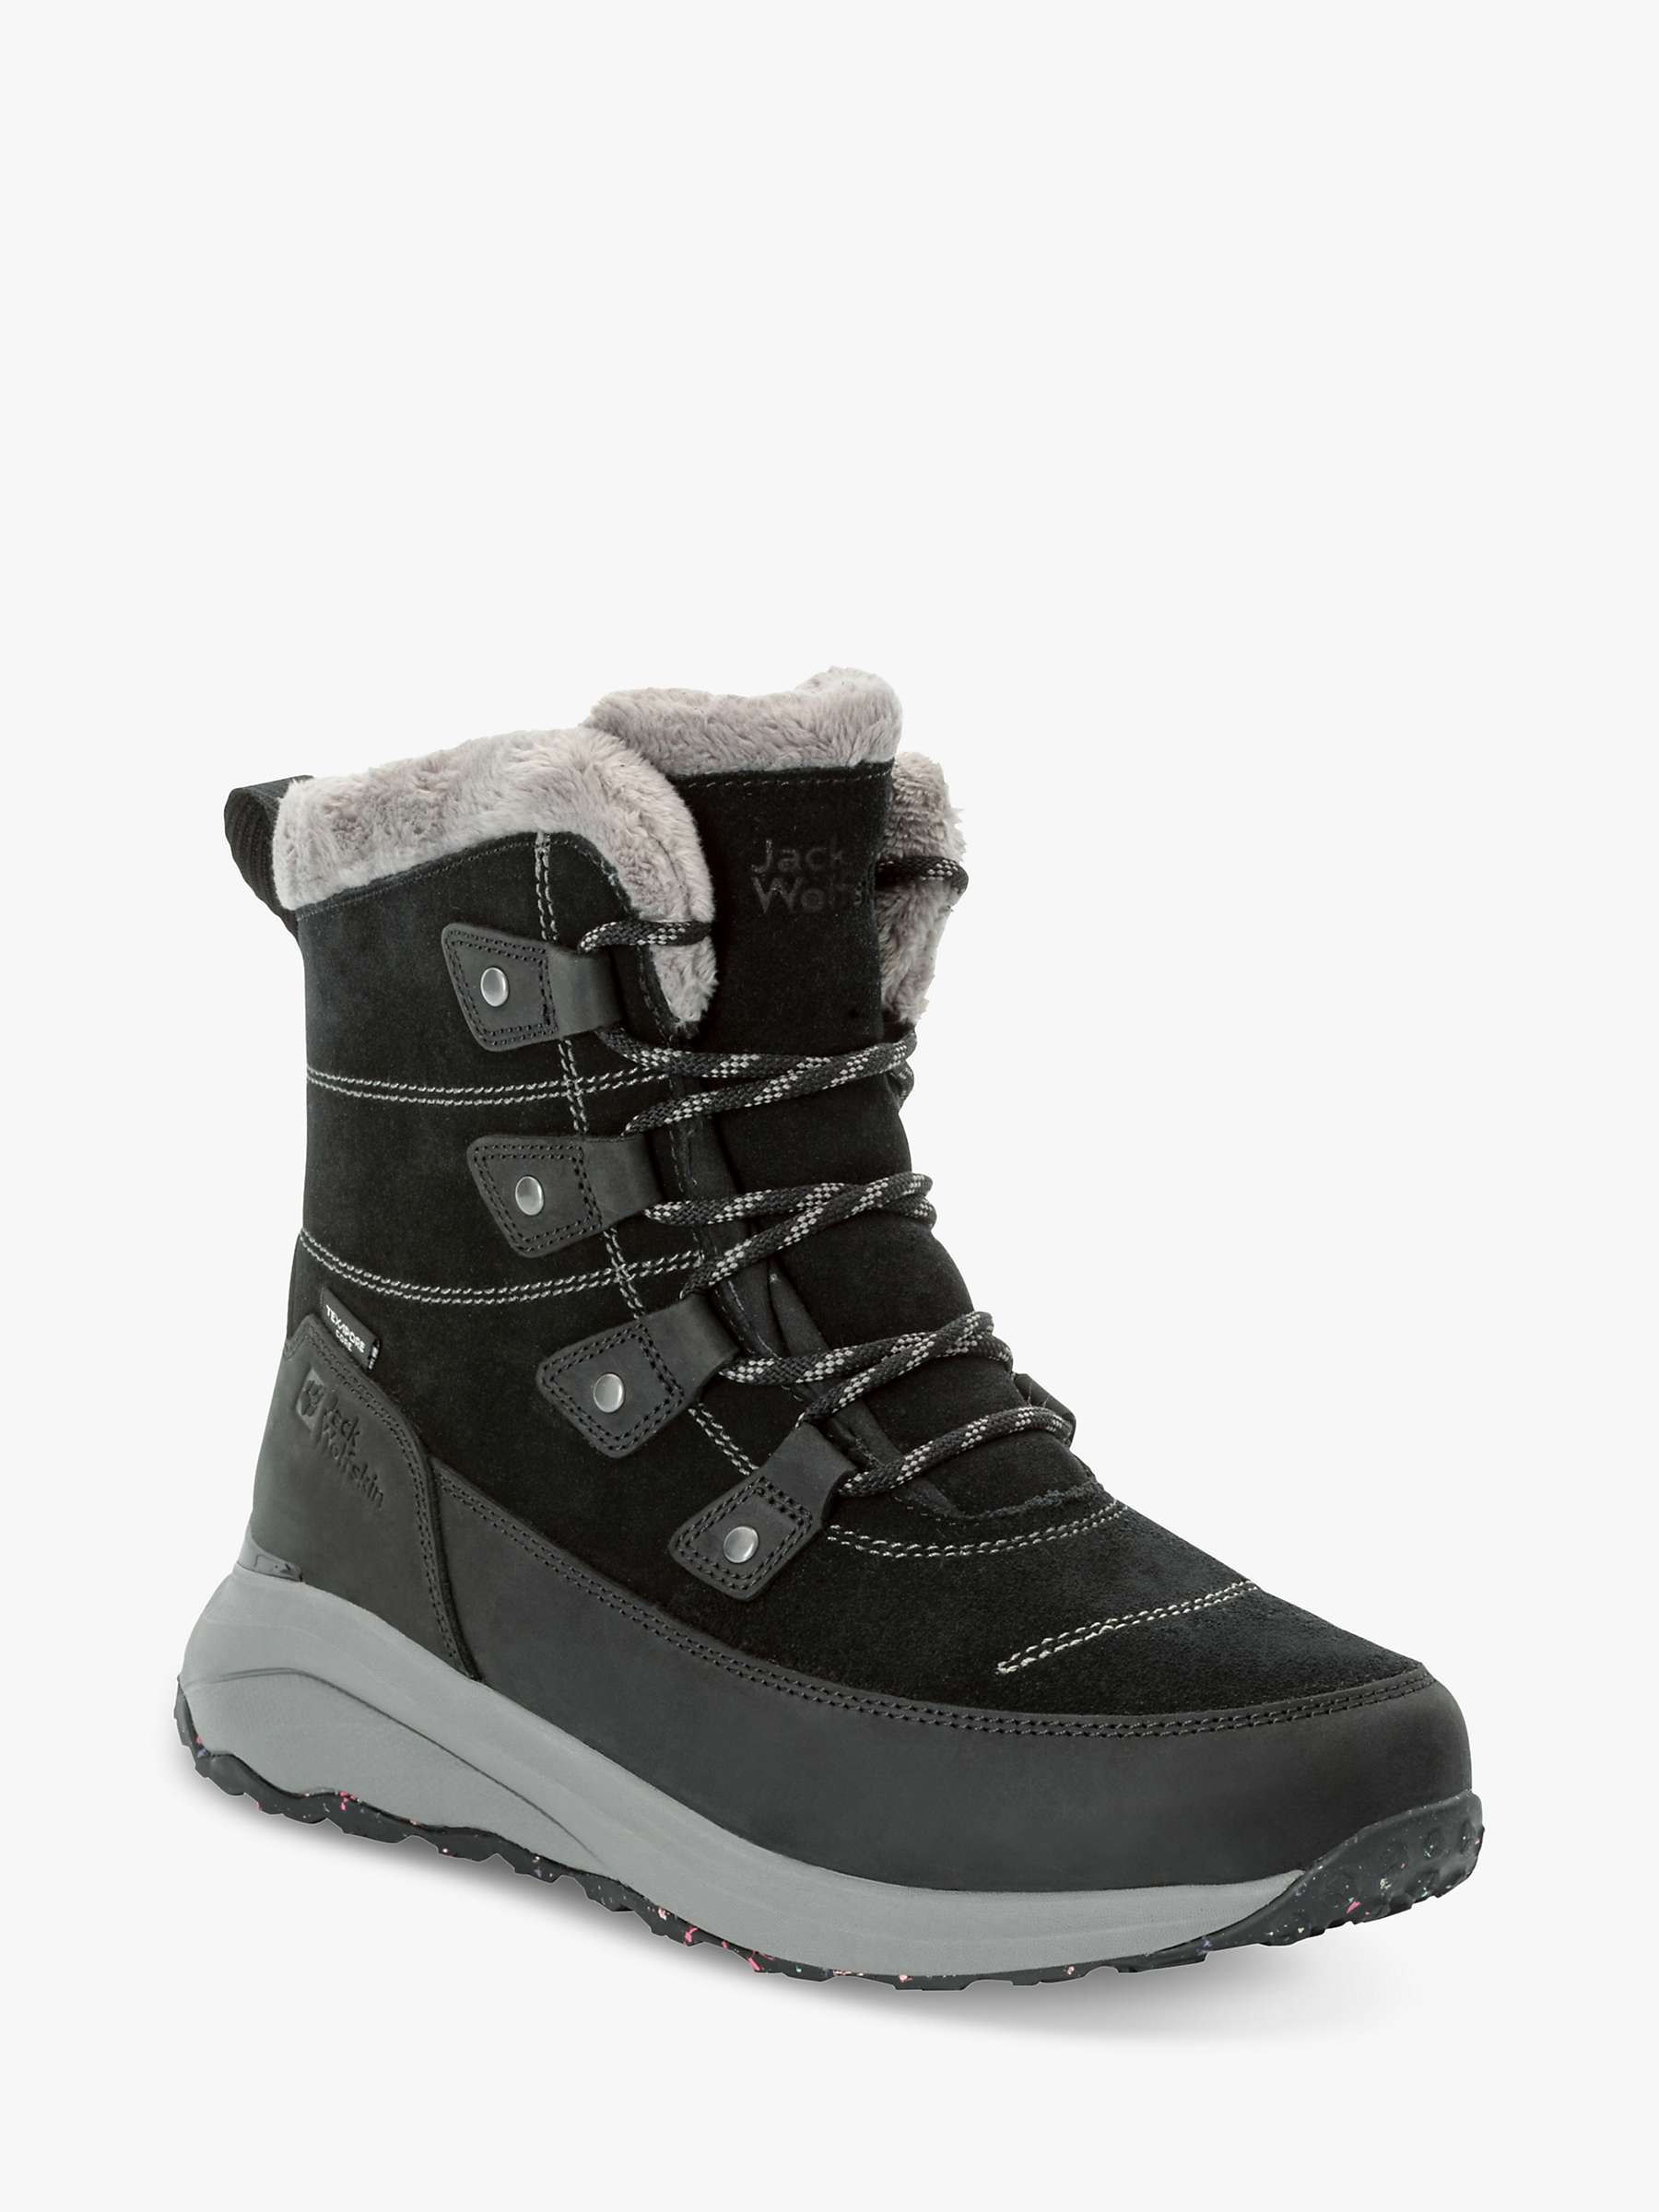 Buy Jack Wolfskin Dromoventure Texapore Women's High Waterproof Walking Boots, Phantom Online at johnlewis.com